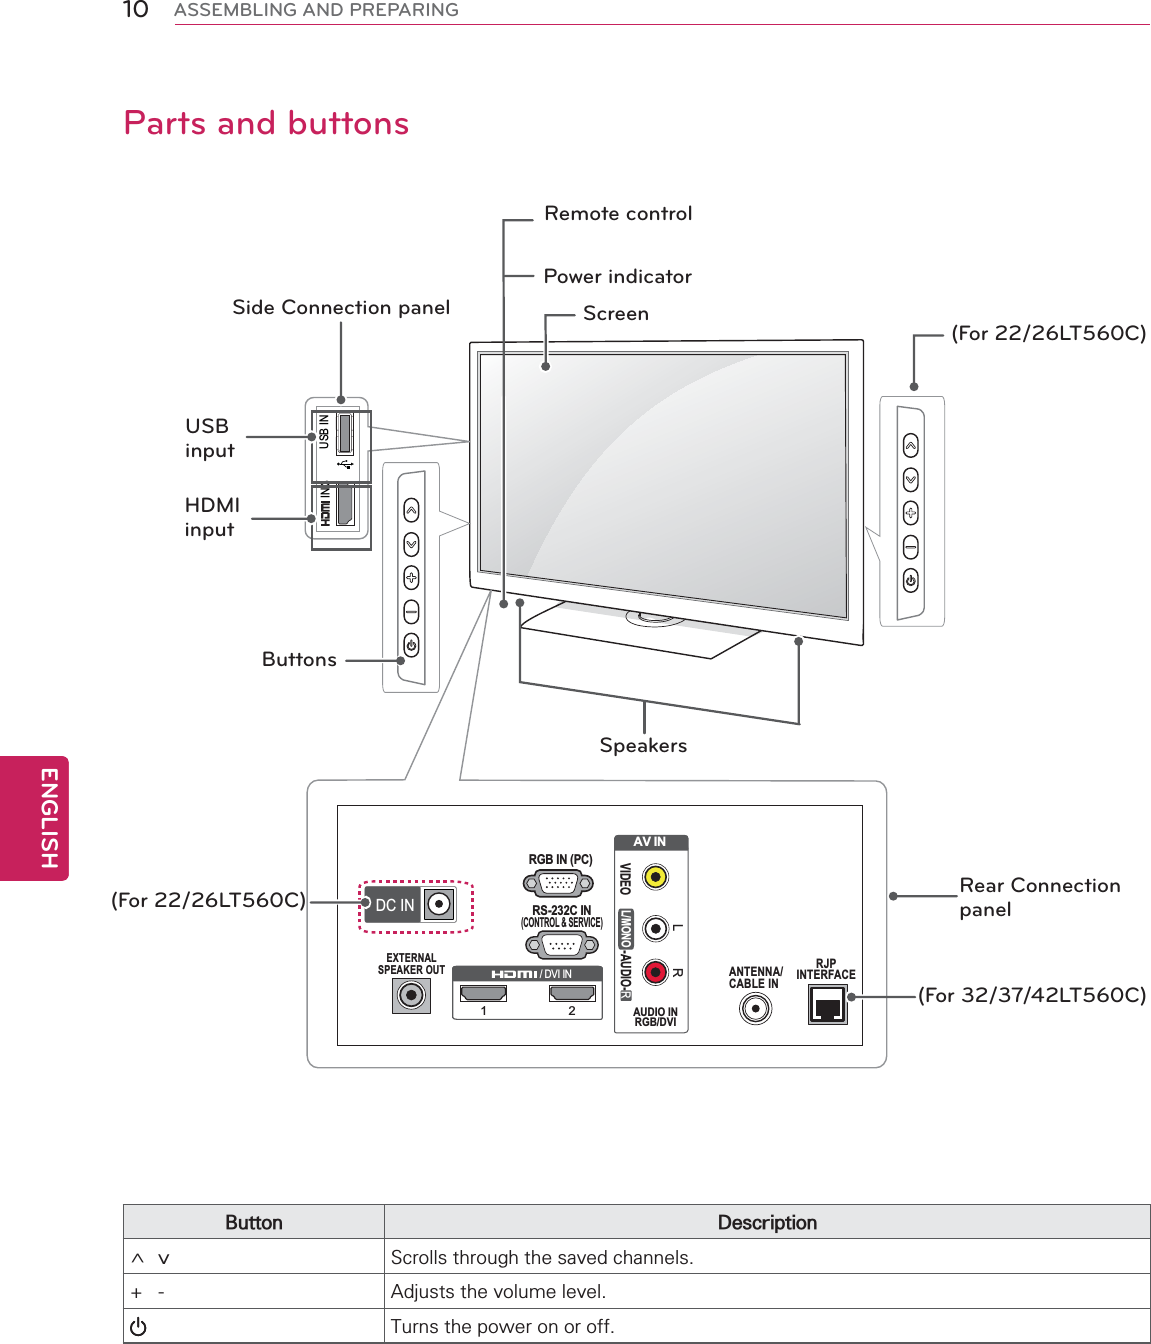 10ENGENGLISHASSEMBLING AND PREPARINGUSB ININ 3 ANTENNA/CABLE INRJPINTERFACEAV INVIDEOL/MONO-AUDIO-RLRAUDIO INRGB/DVI12/ DVI INEXTERNALSPEAKER OUTRS-232C IN(CONTROL &amp; SERVICE)RGB IN (PC)DC INParts and buttonsUSB inputHDMI inputScreenRear Connection panelButtonsSide Connection panelSpeakersRemote controlPower indicator(For 22/26LT560C). (6AY6FUROOVWKURXJKWKHVDYHGFKDQQHOV $GMXVWVWKHYROXPHOHYHO 7XUQVWKHSRZHURQRURII(For 22/26LT560C)(For 32/37/42LT560C)